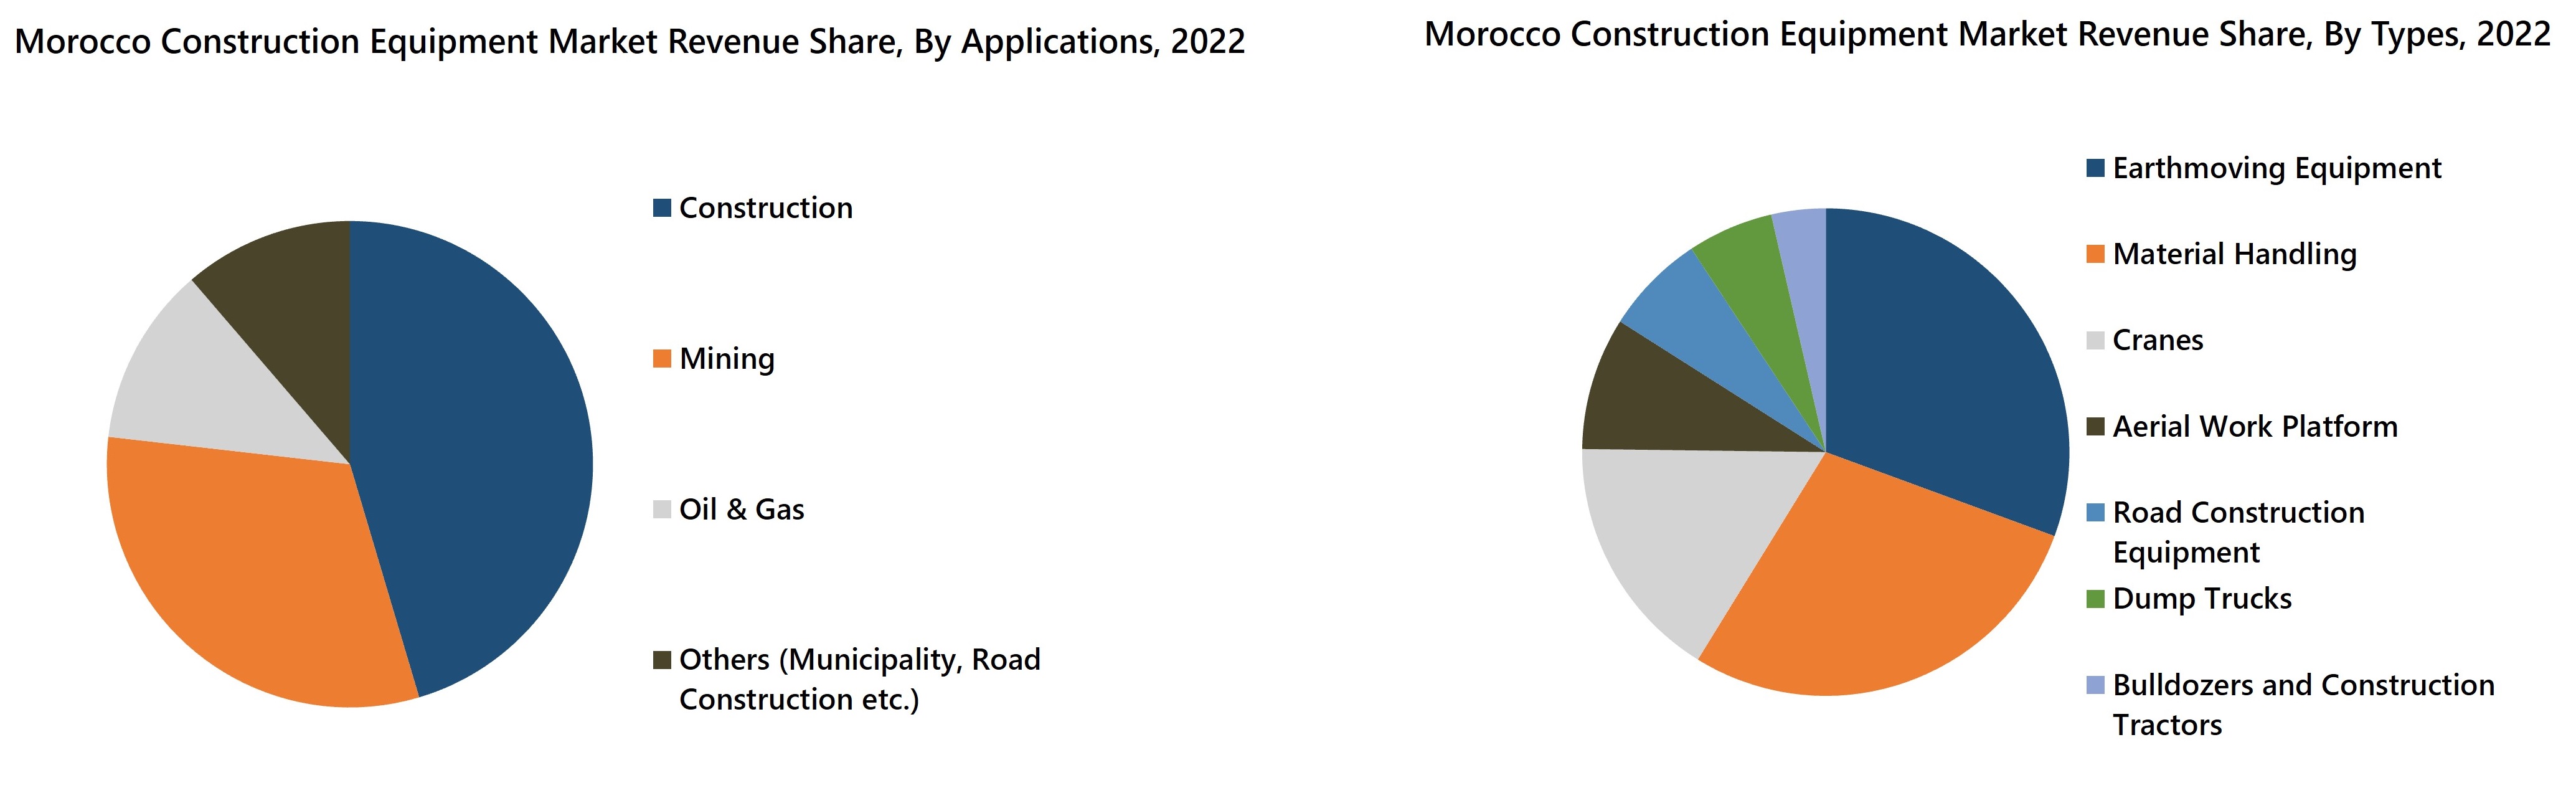 Morocco Construction Equipment Market Revenue Share